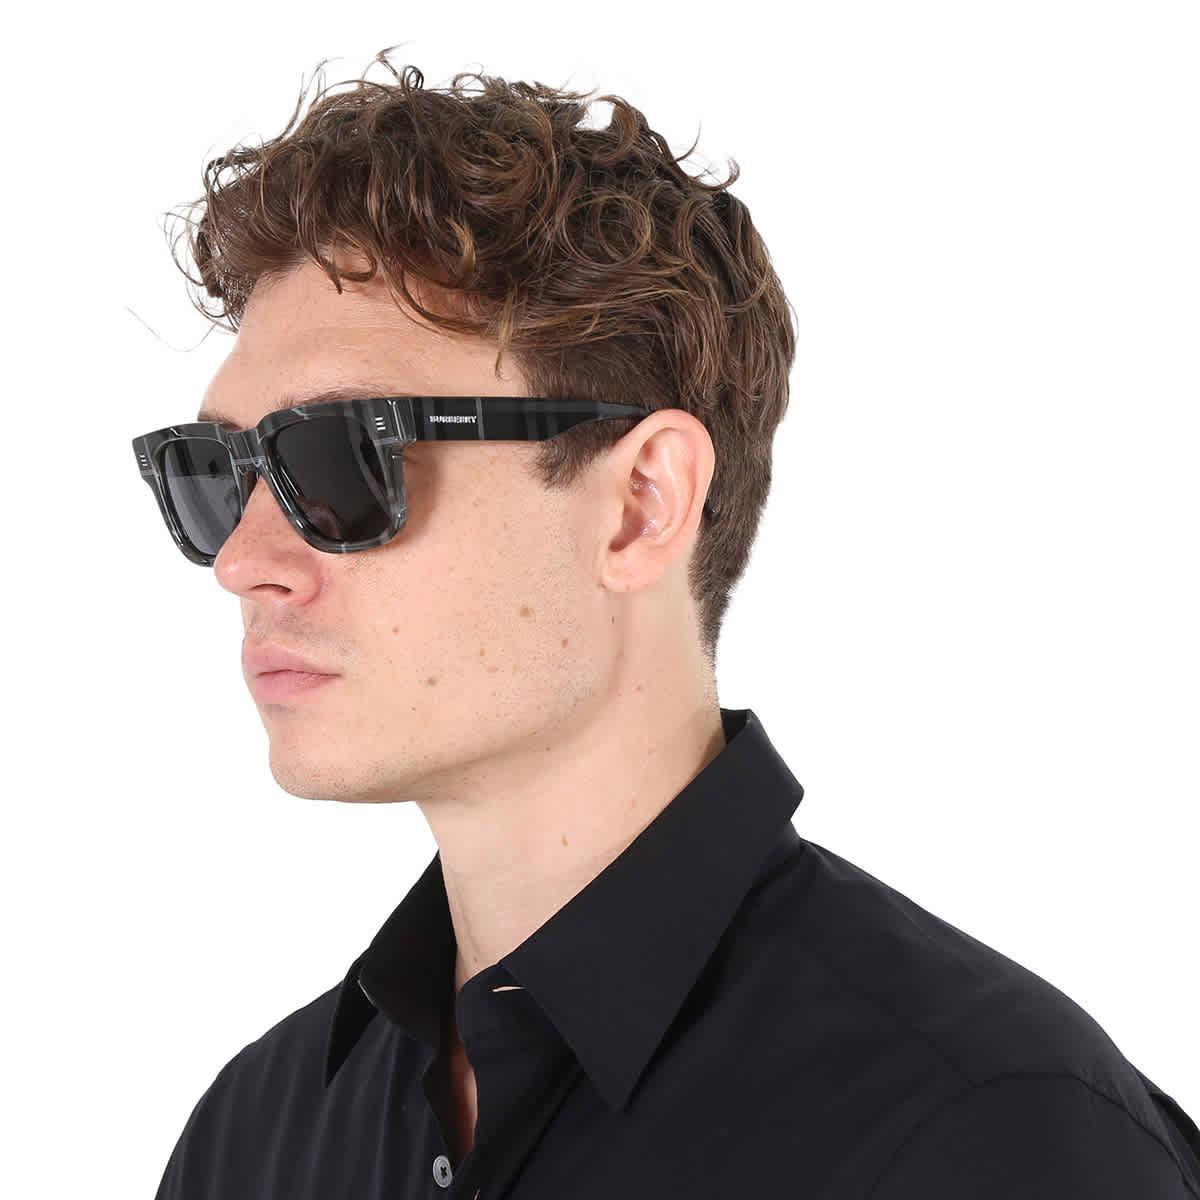 burberry Hayden 54mm Rectangular Sunglasses Product Image